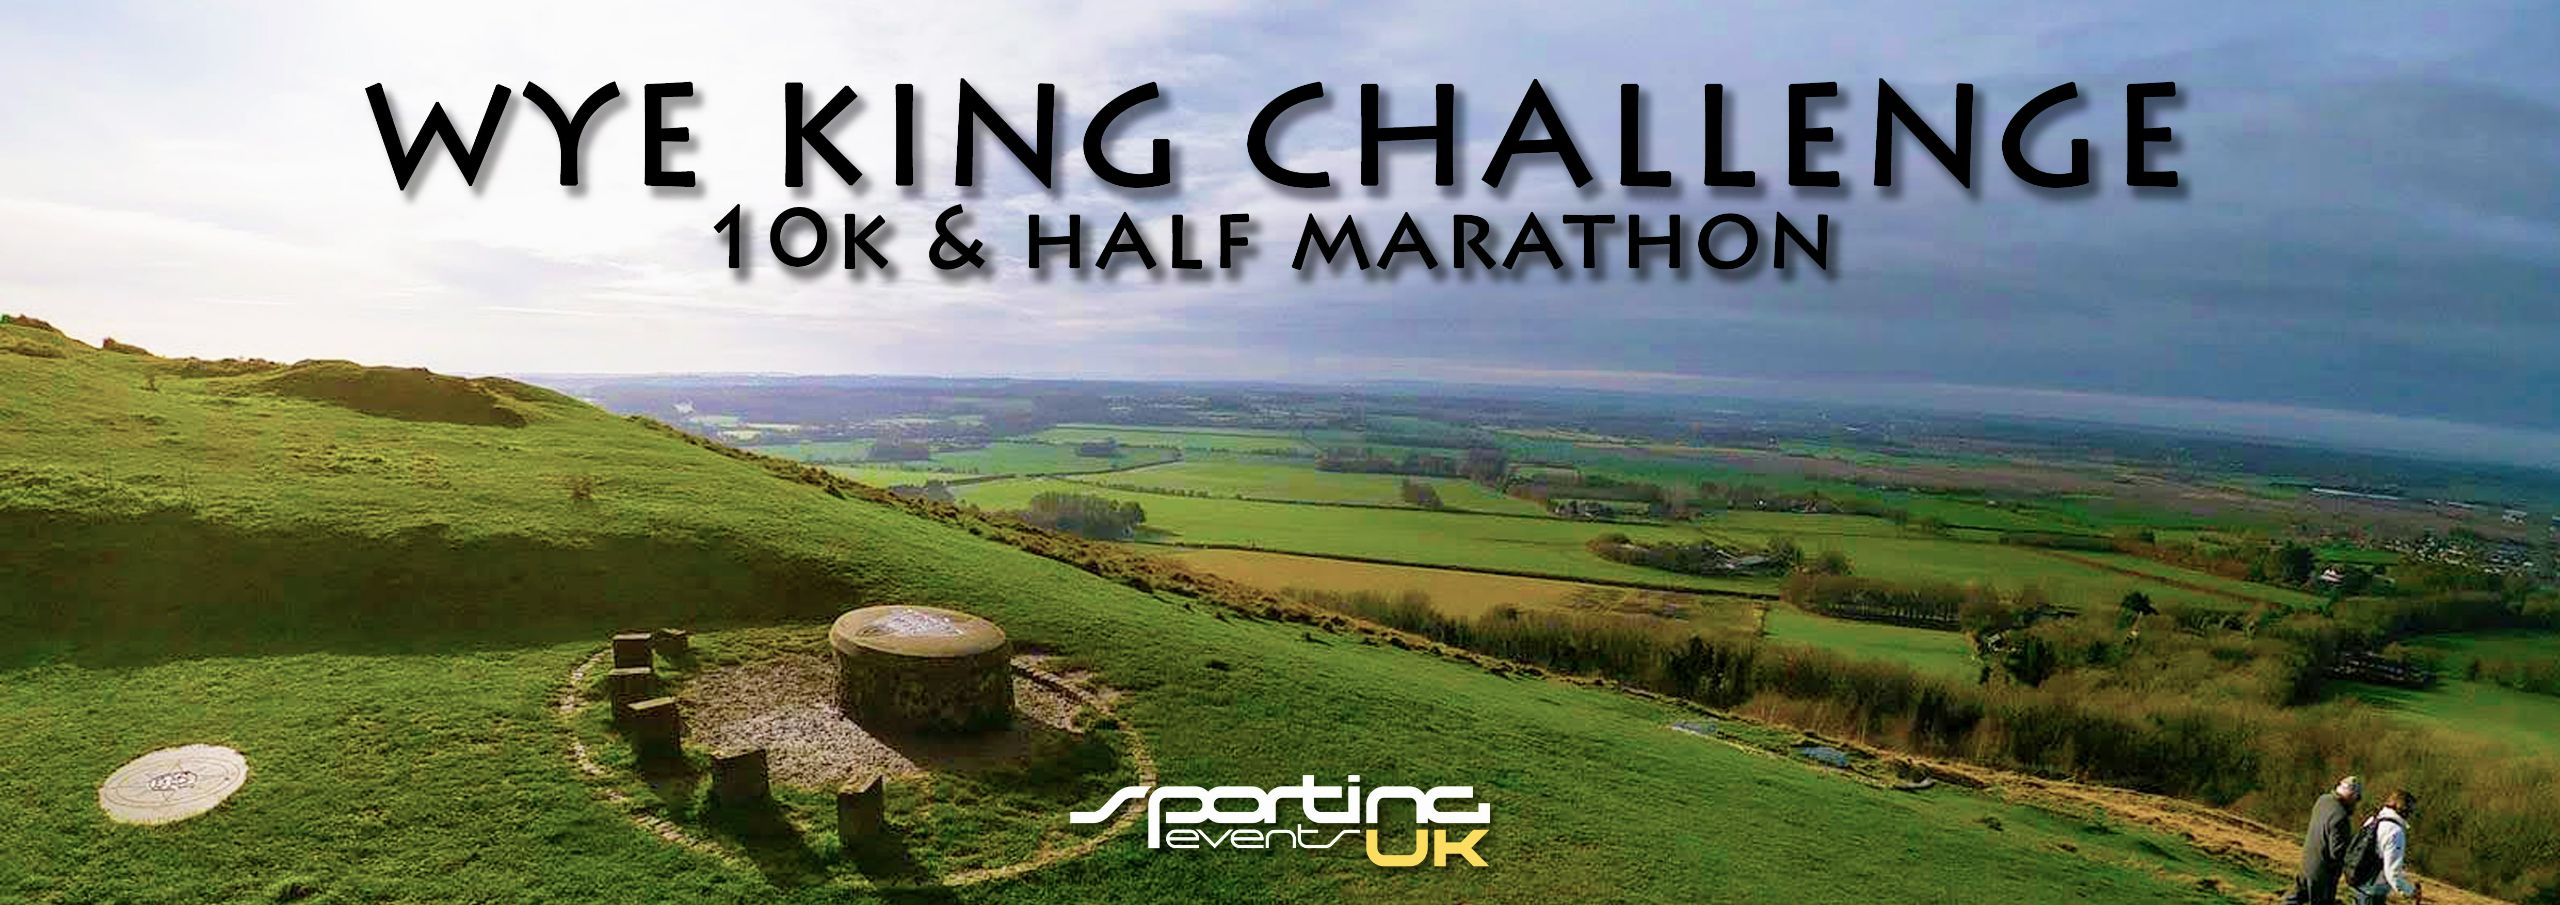 Image for Wye King Challenge - Half Marathon